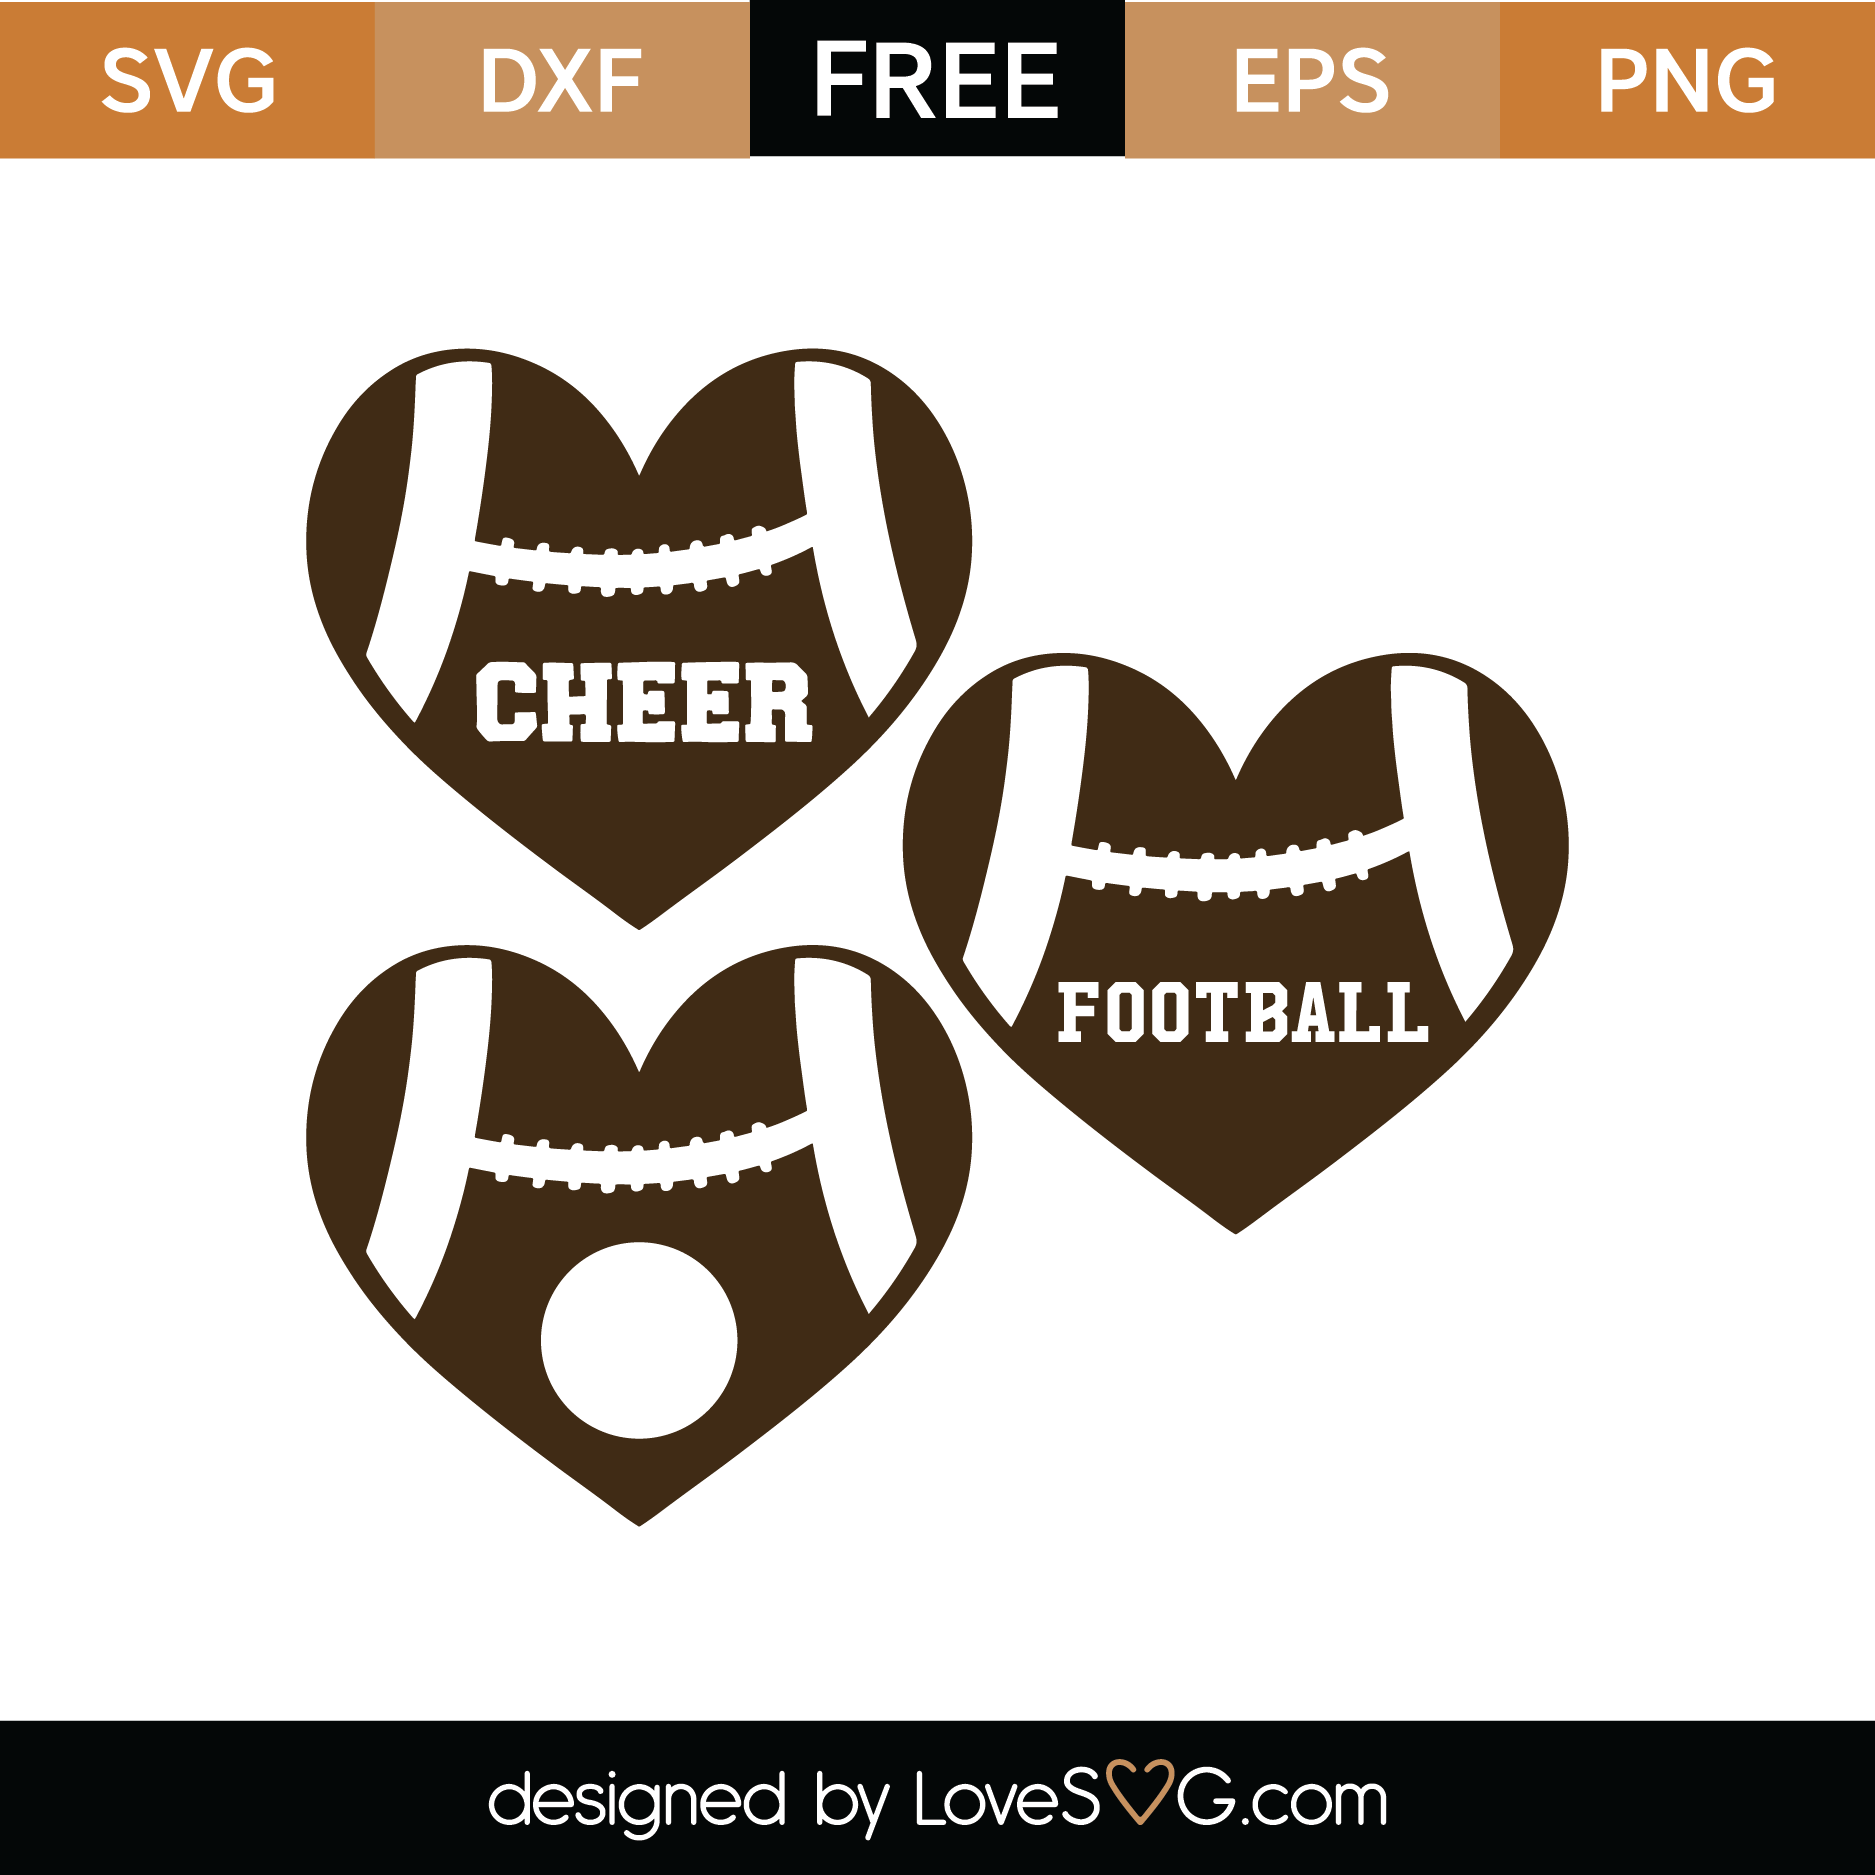 Download Free Football Monogram SVG Cut File | Lovesvg.com